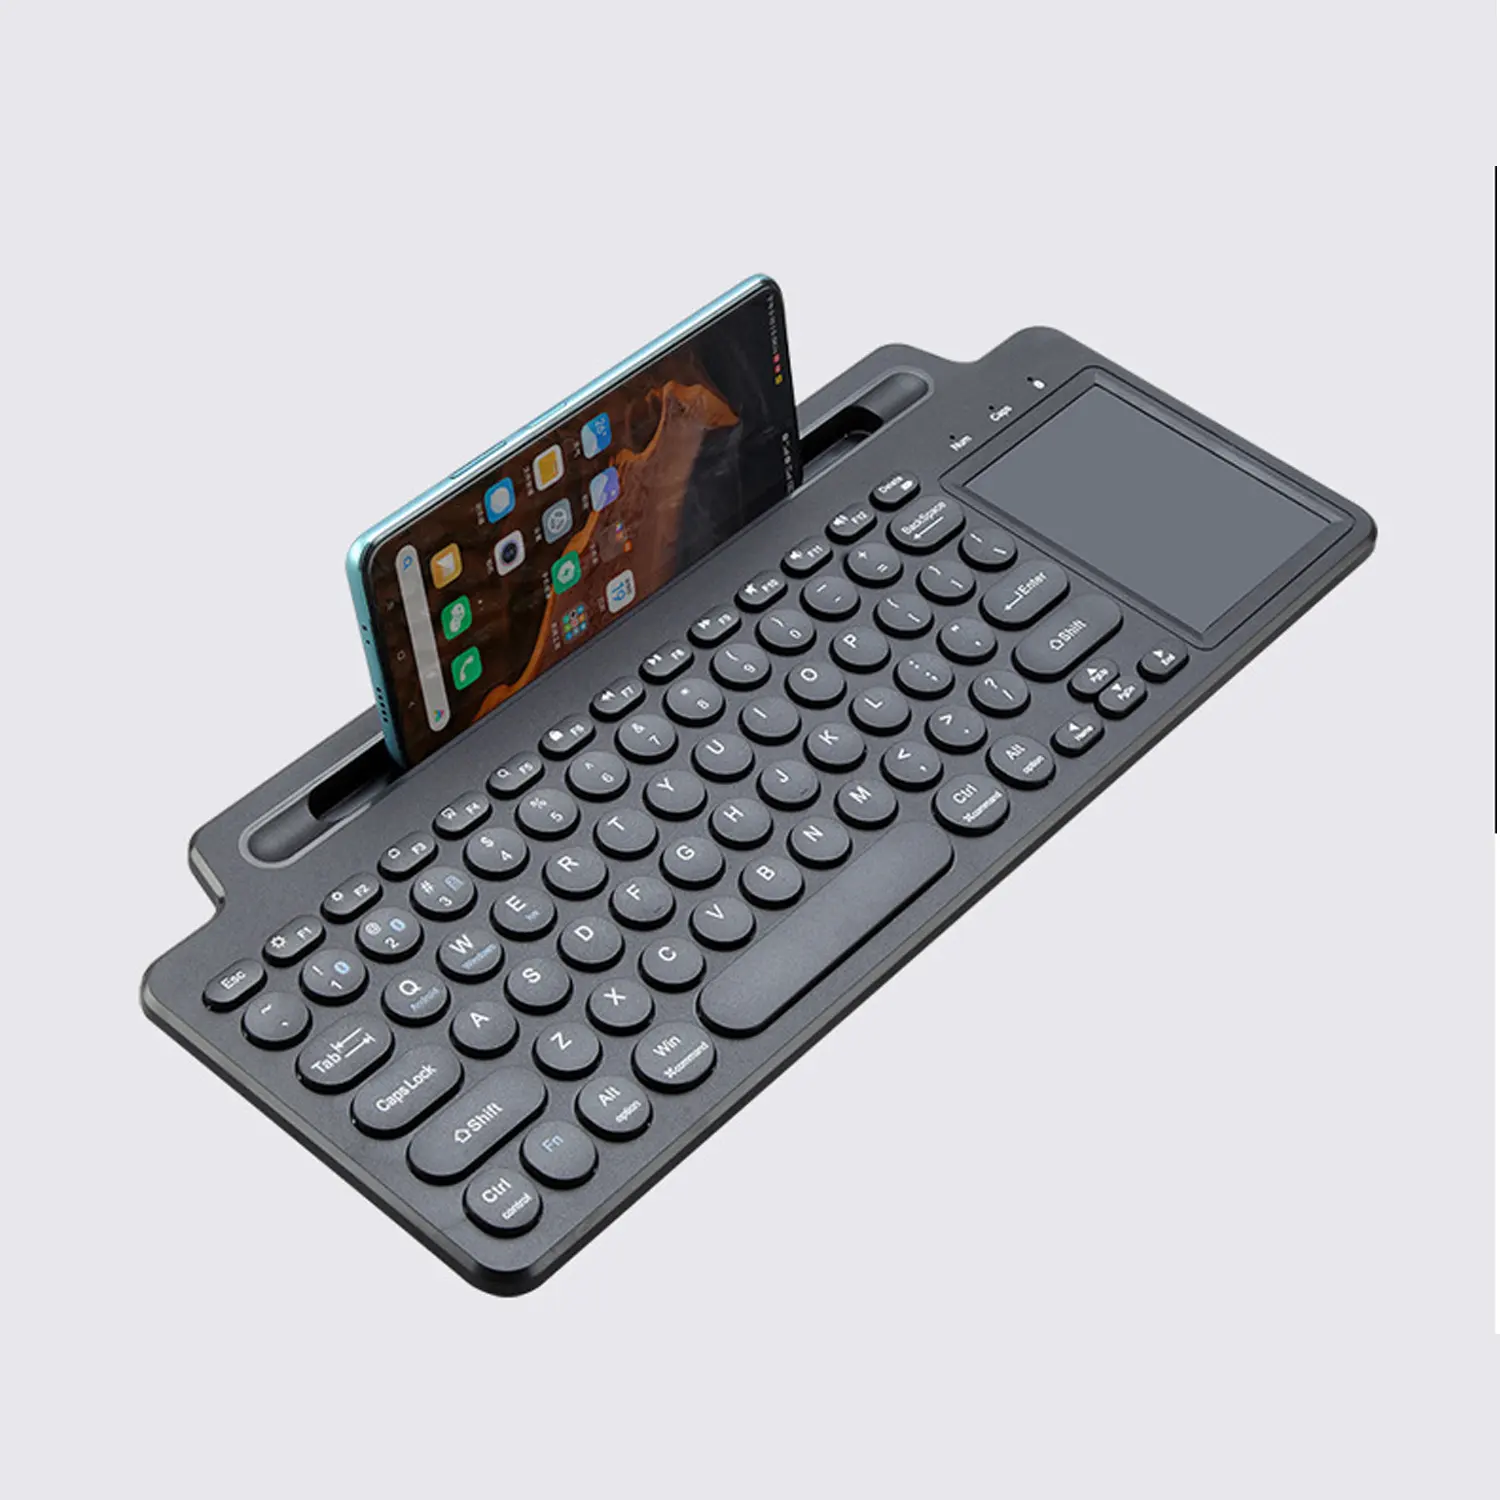 Kablosuz Touchpad bluetooth klavye dahili tutucu ve kolay medya kontrolü ofis Tablet/telefon/bilgisayar dizüstü bilgisayar/dizüstü bilgisayar